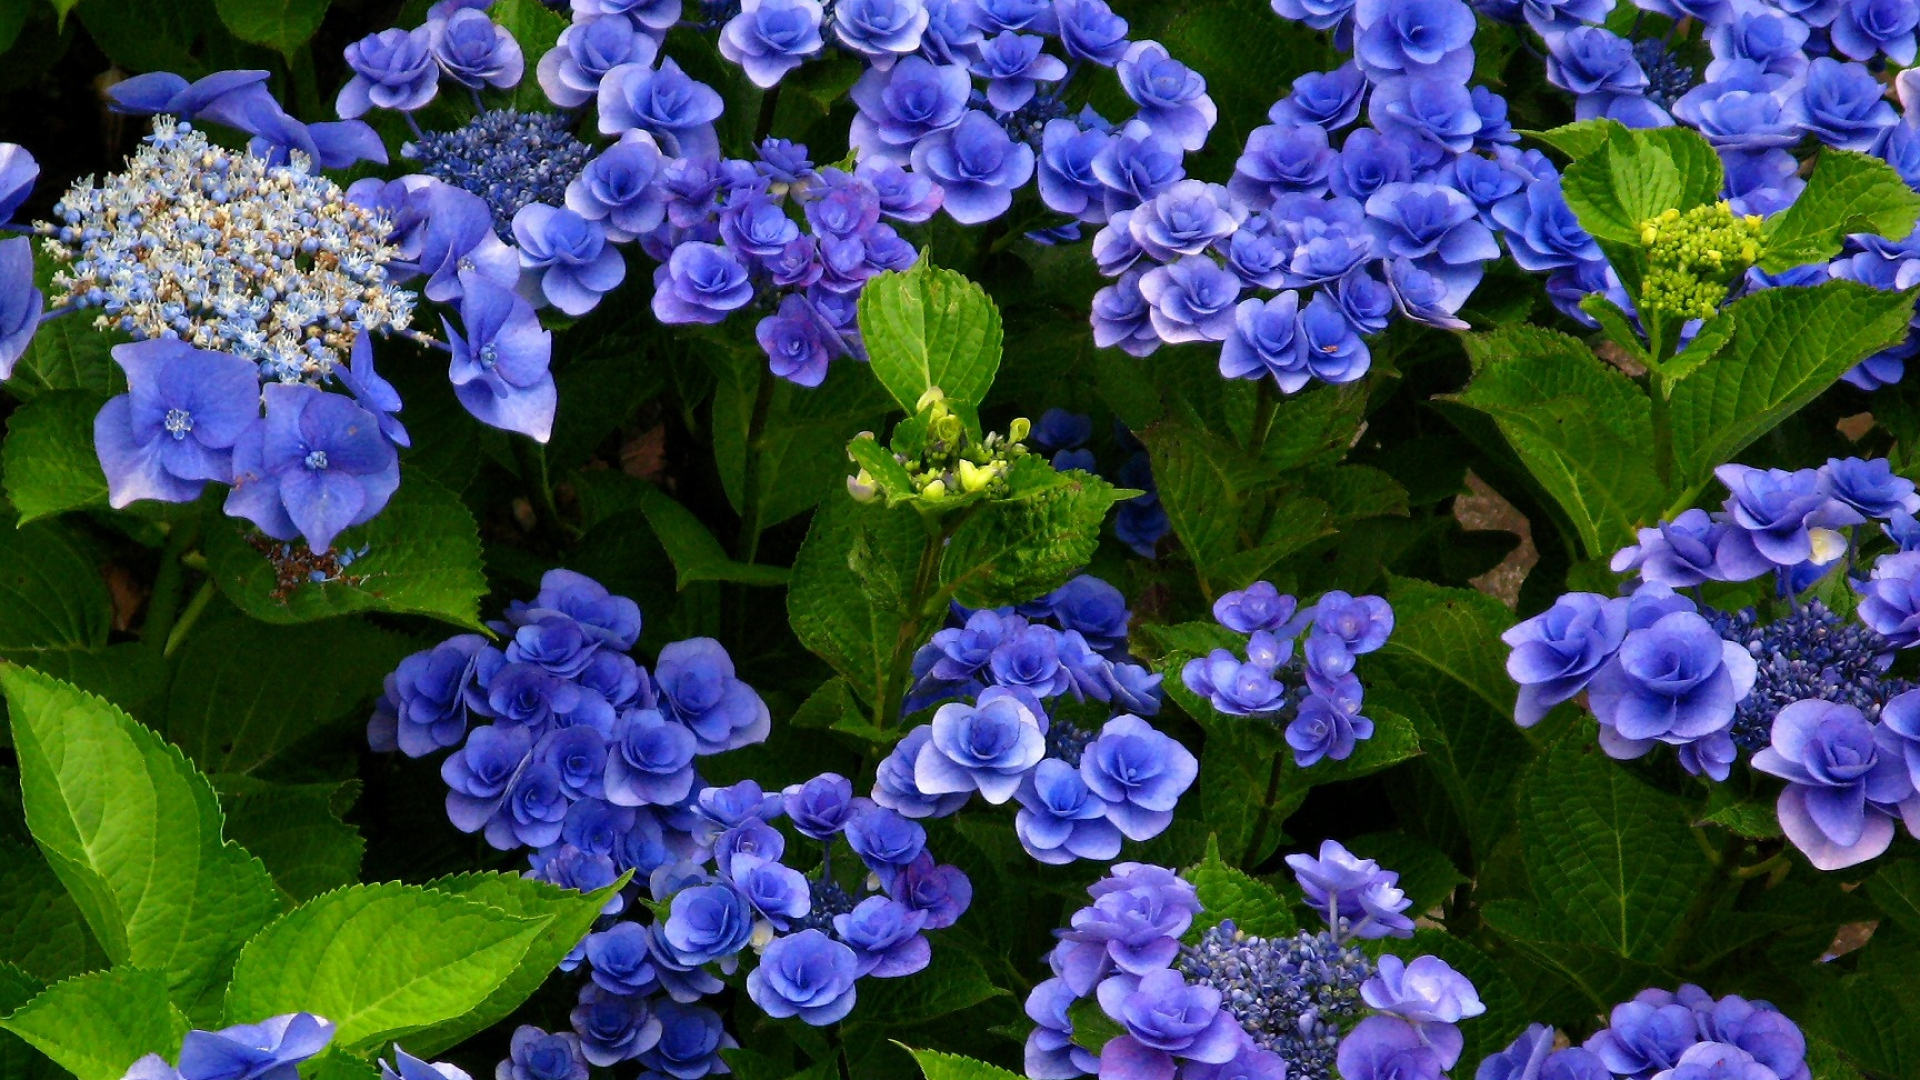 Hydrangea background, Floral beauty, Nature's enchantment, Captivating colors, 1920x1080 Full HD Desktop